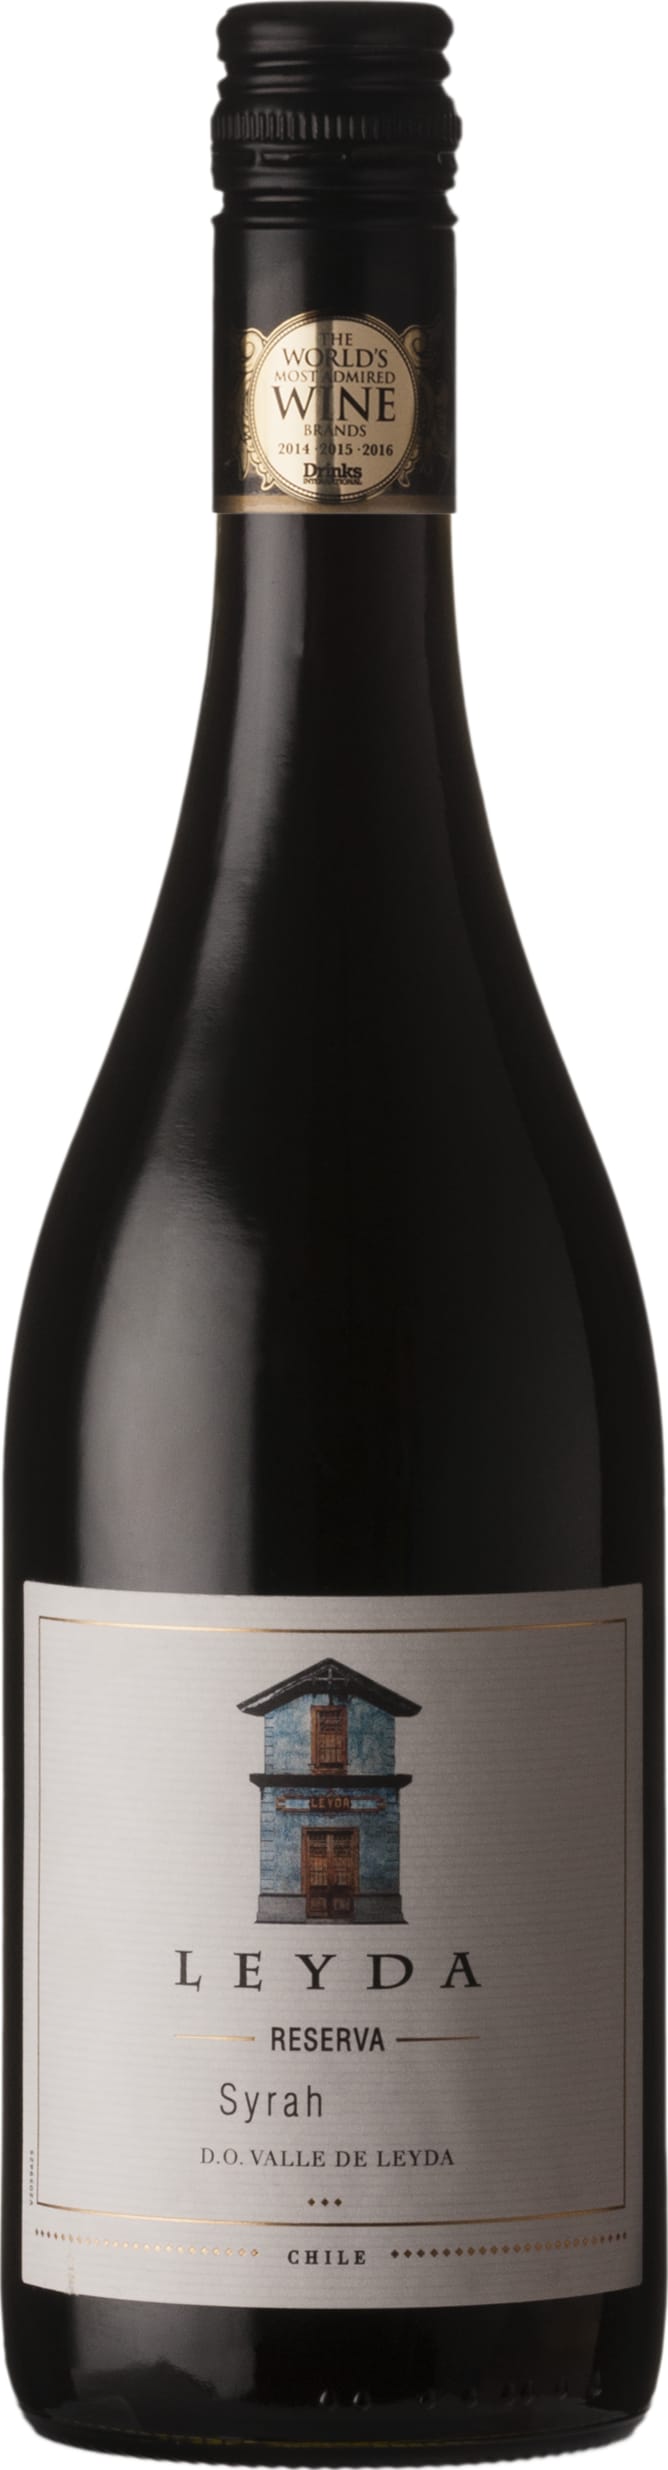 Vina Leyda Syrah Reserva 2020 75cl - Buy Vina Leyda Wines from GREAT WINES DIRECT wine shop